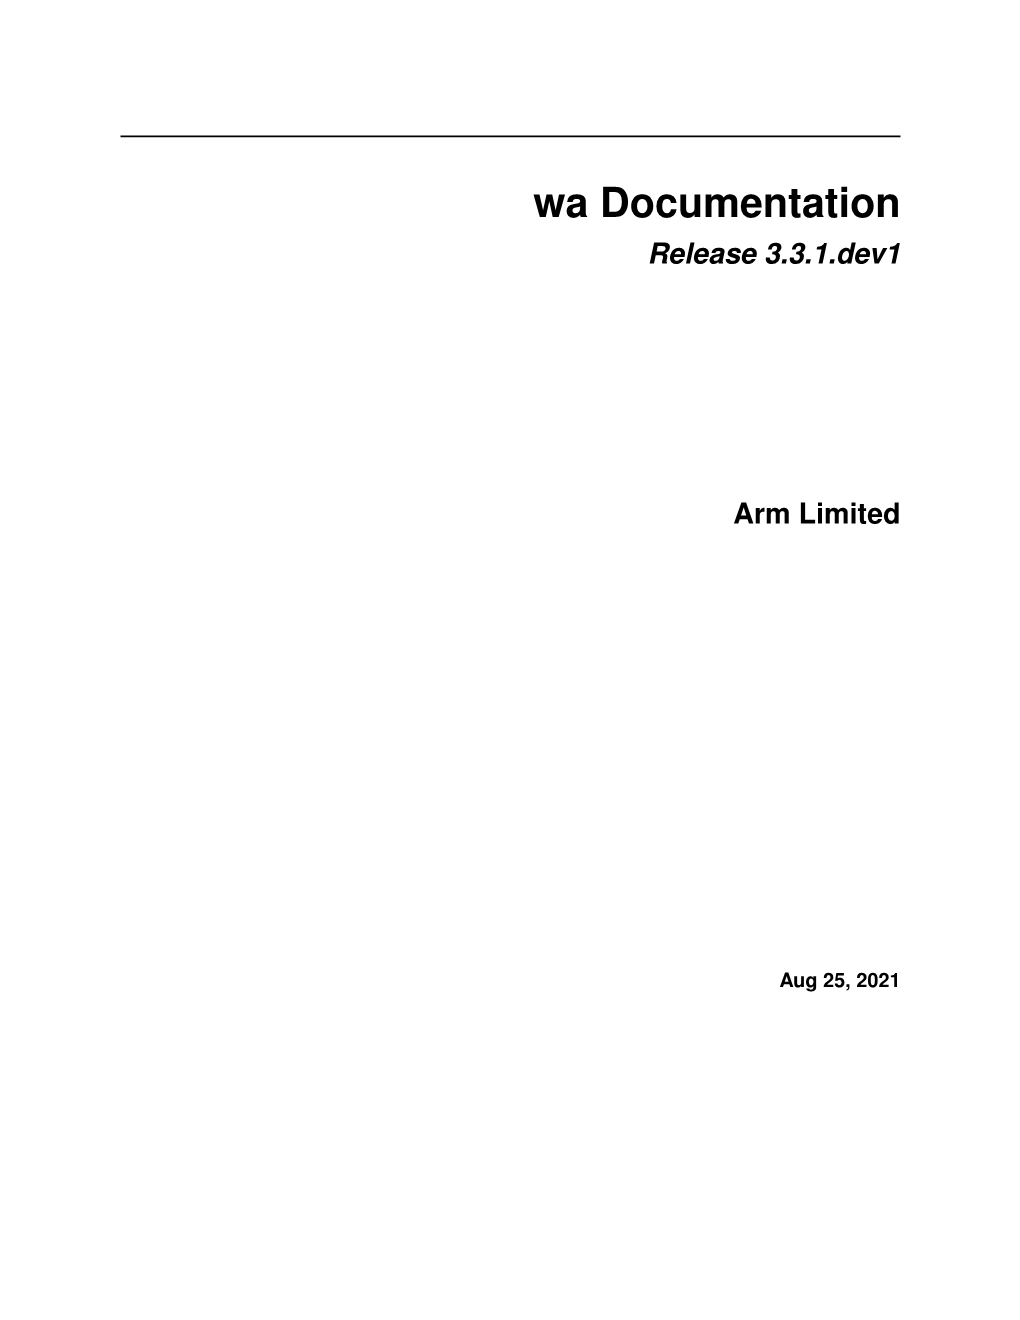 Wa Documentation Release 3.3.1.Dev1